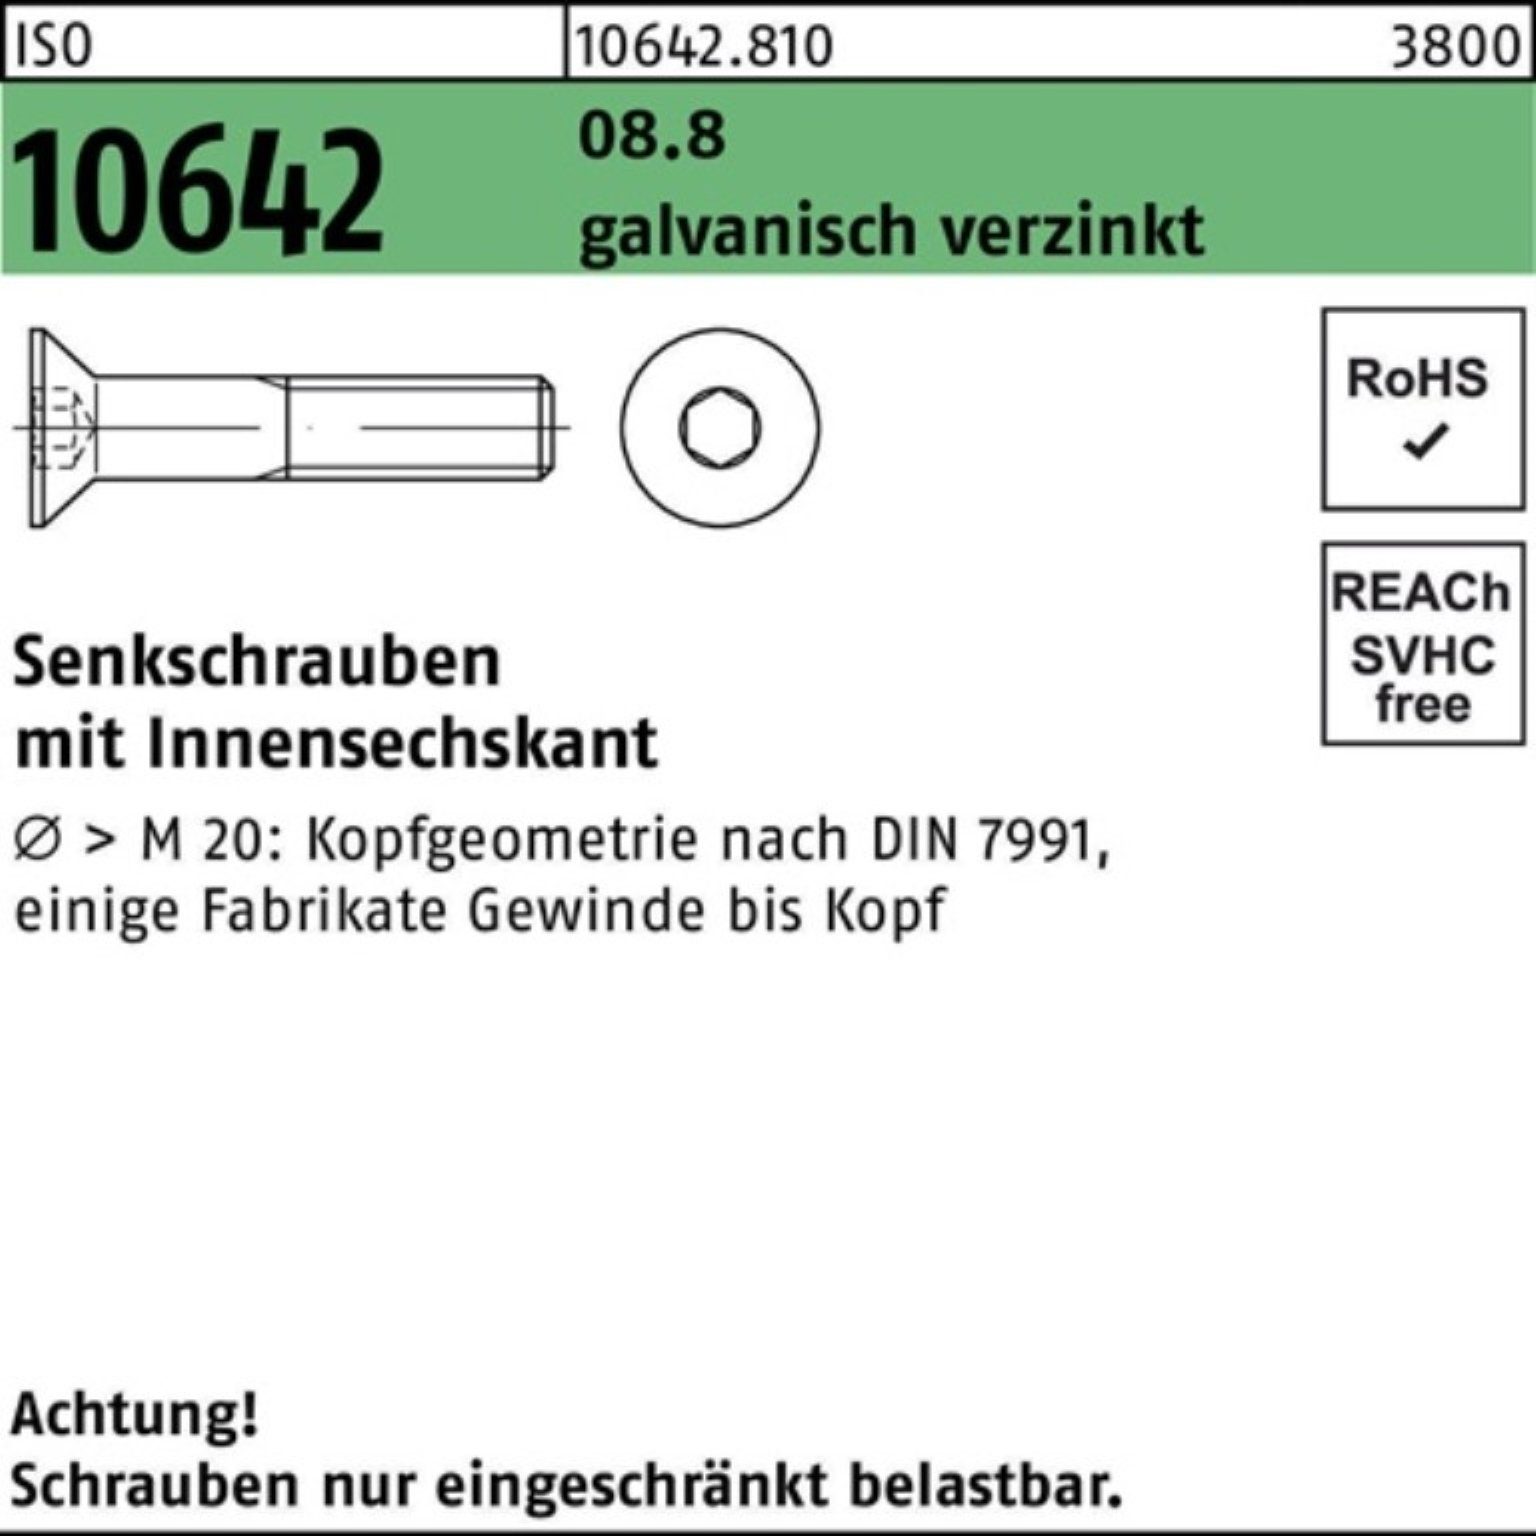 Reyher Senkschraube 500er galv.verz. 500 M3x Pack Senkschraube 20 8.8 10642 Innen-6kt ISO